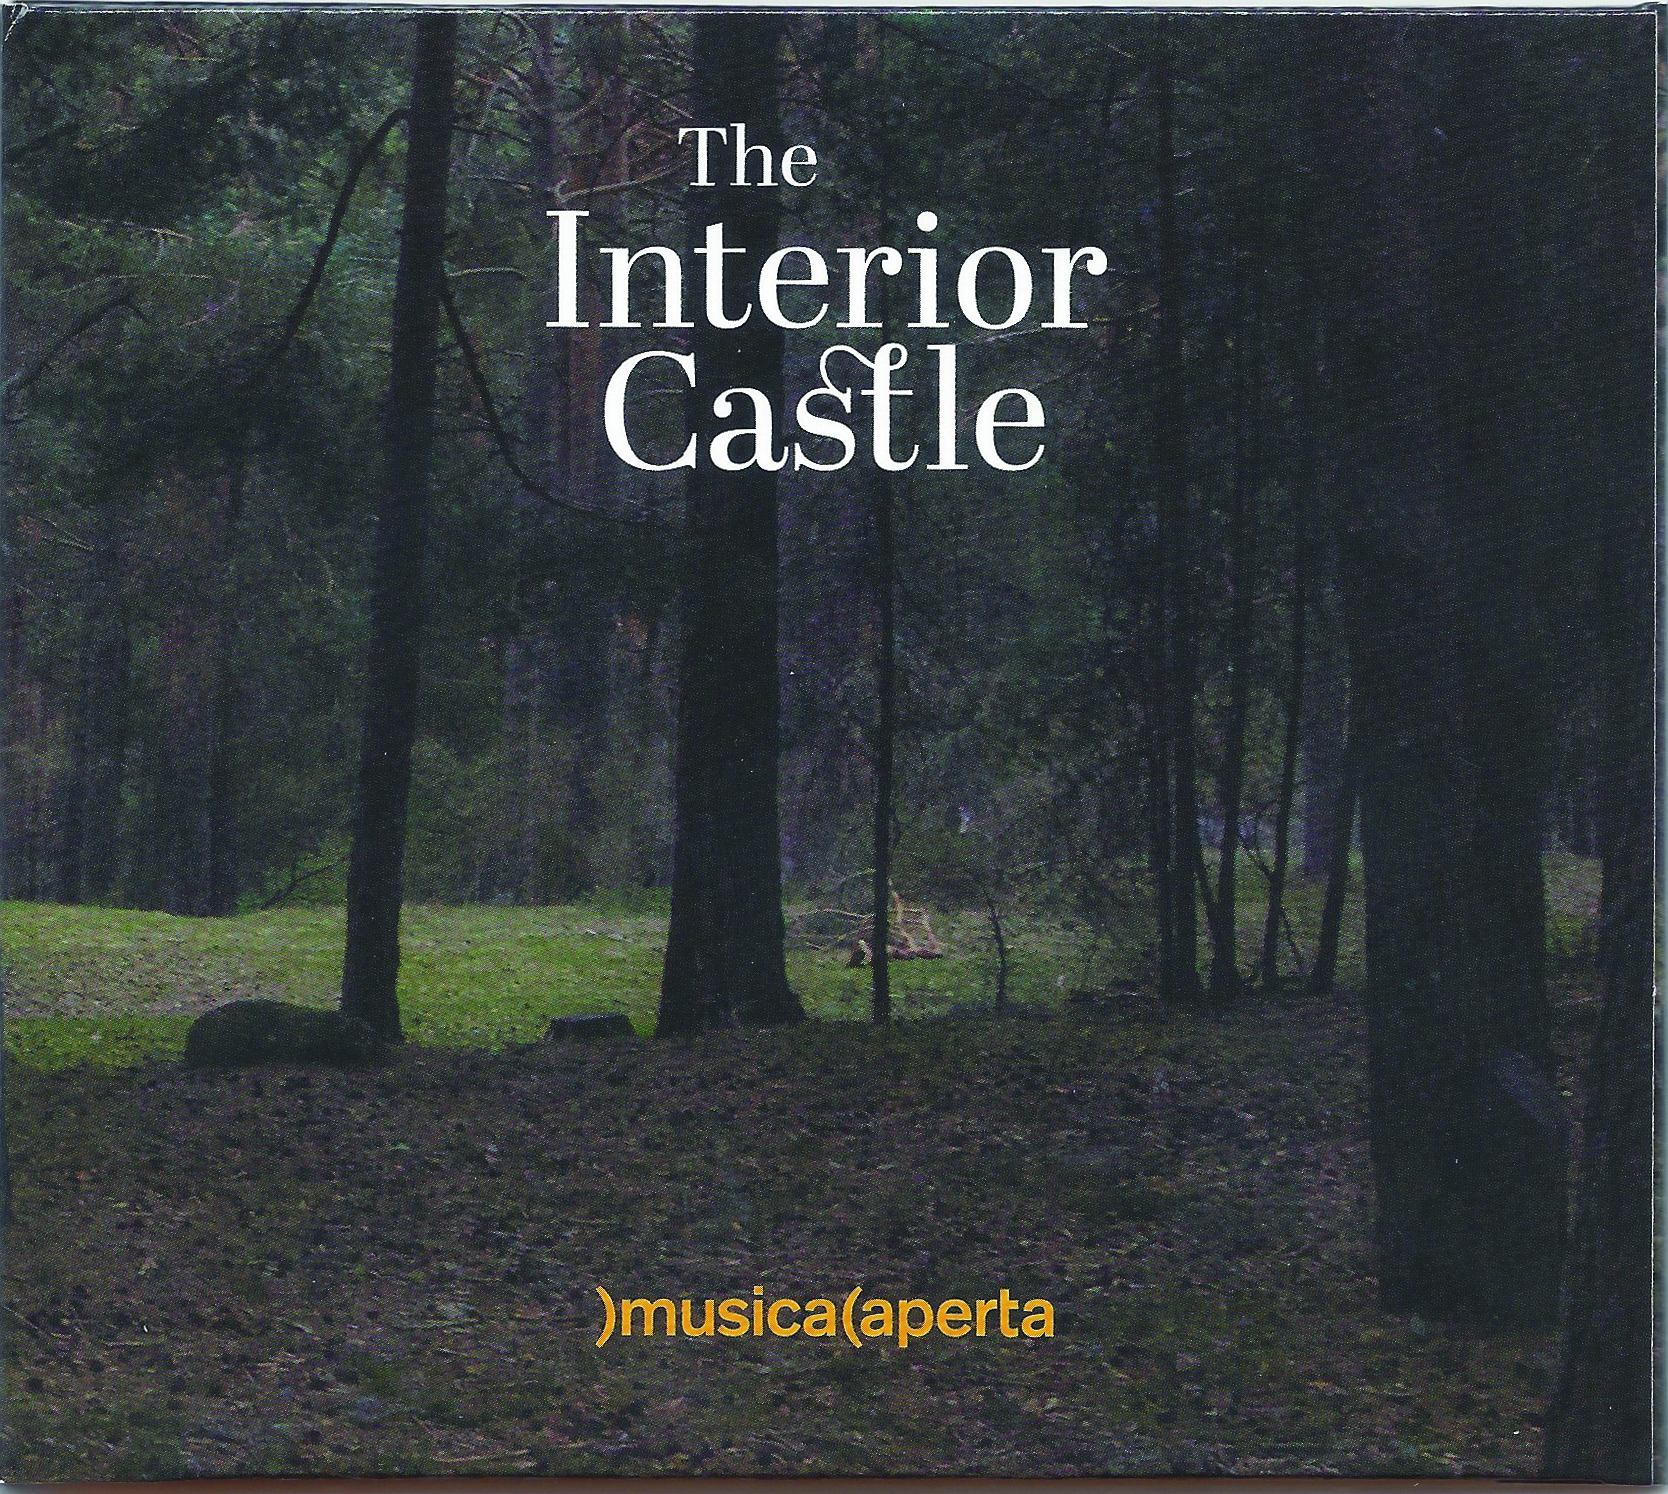 Musica Aperta - The Interior Castle